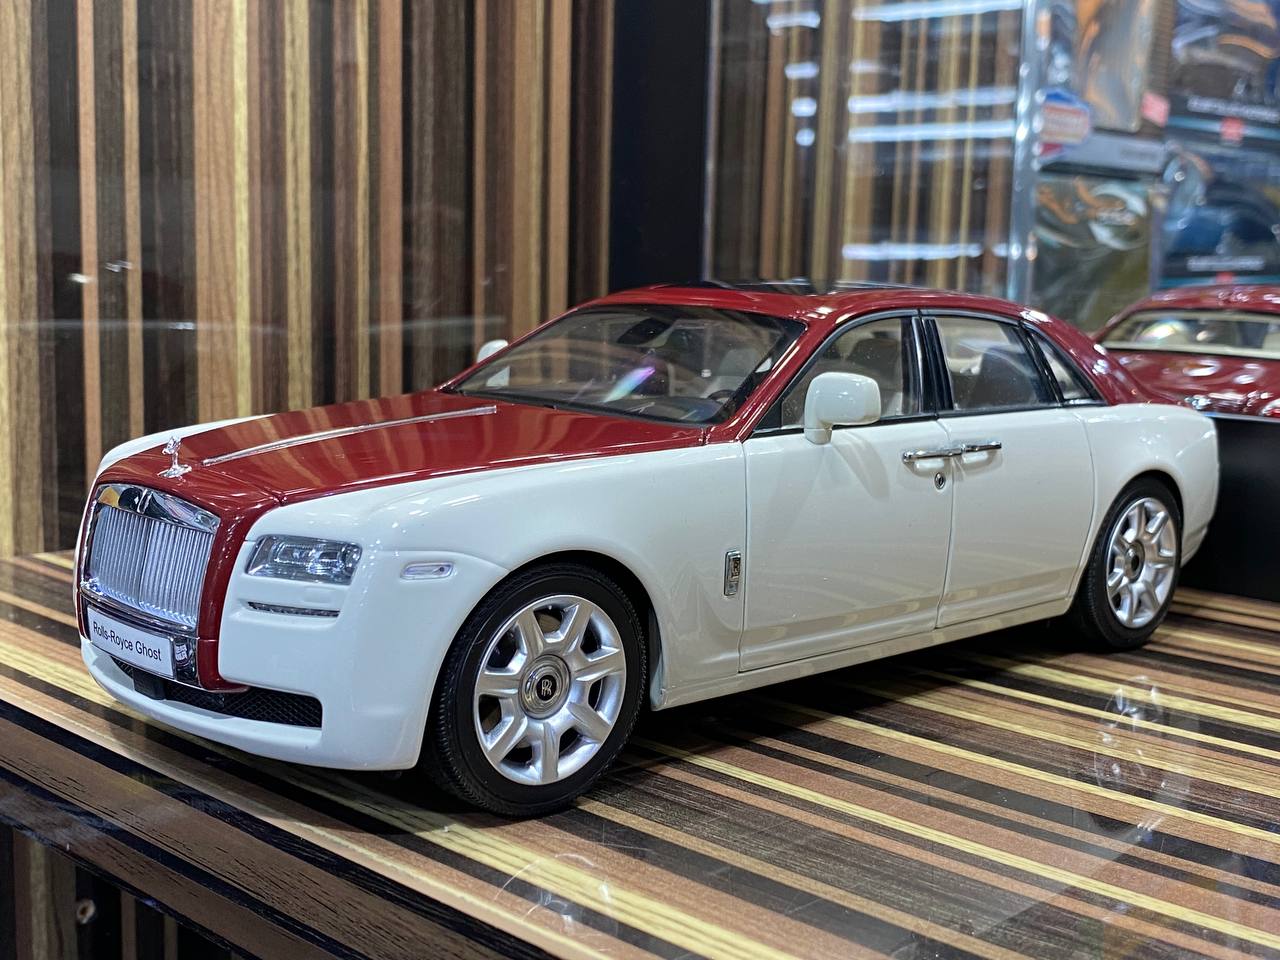 1/18 Diecast Rolls-Royce Ghost Kyosho Scale Model Car